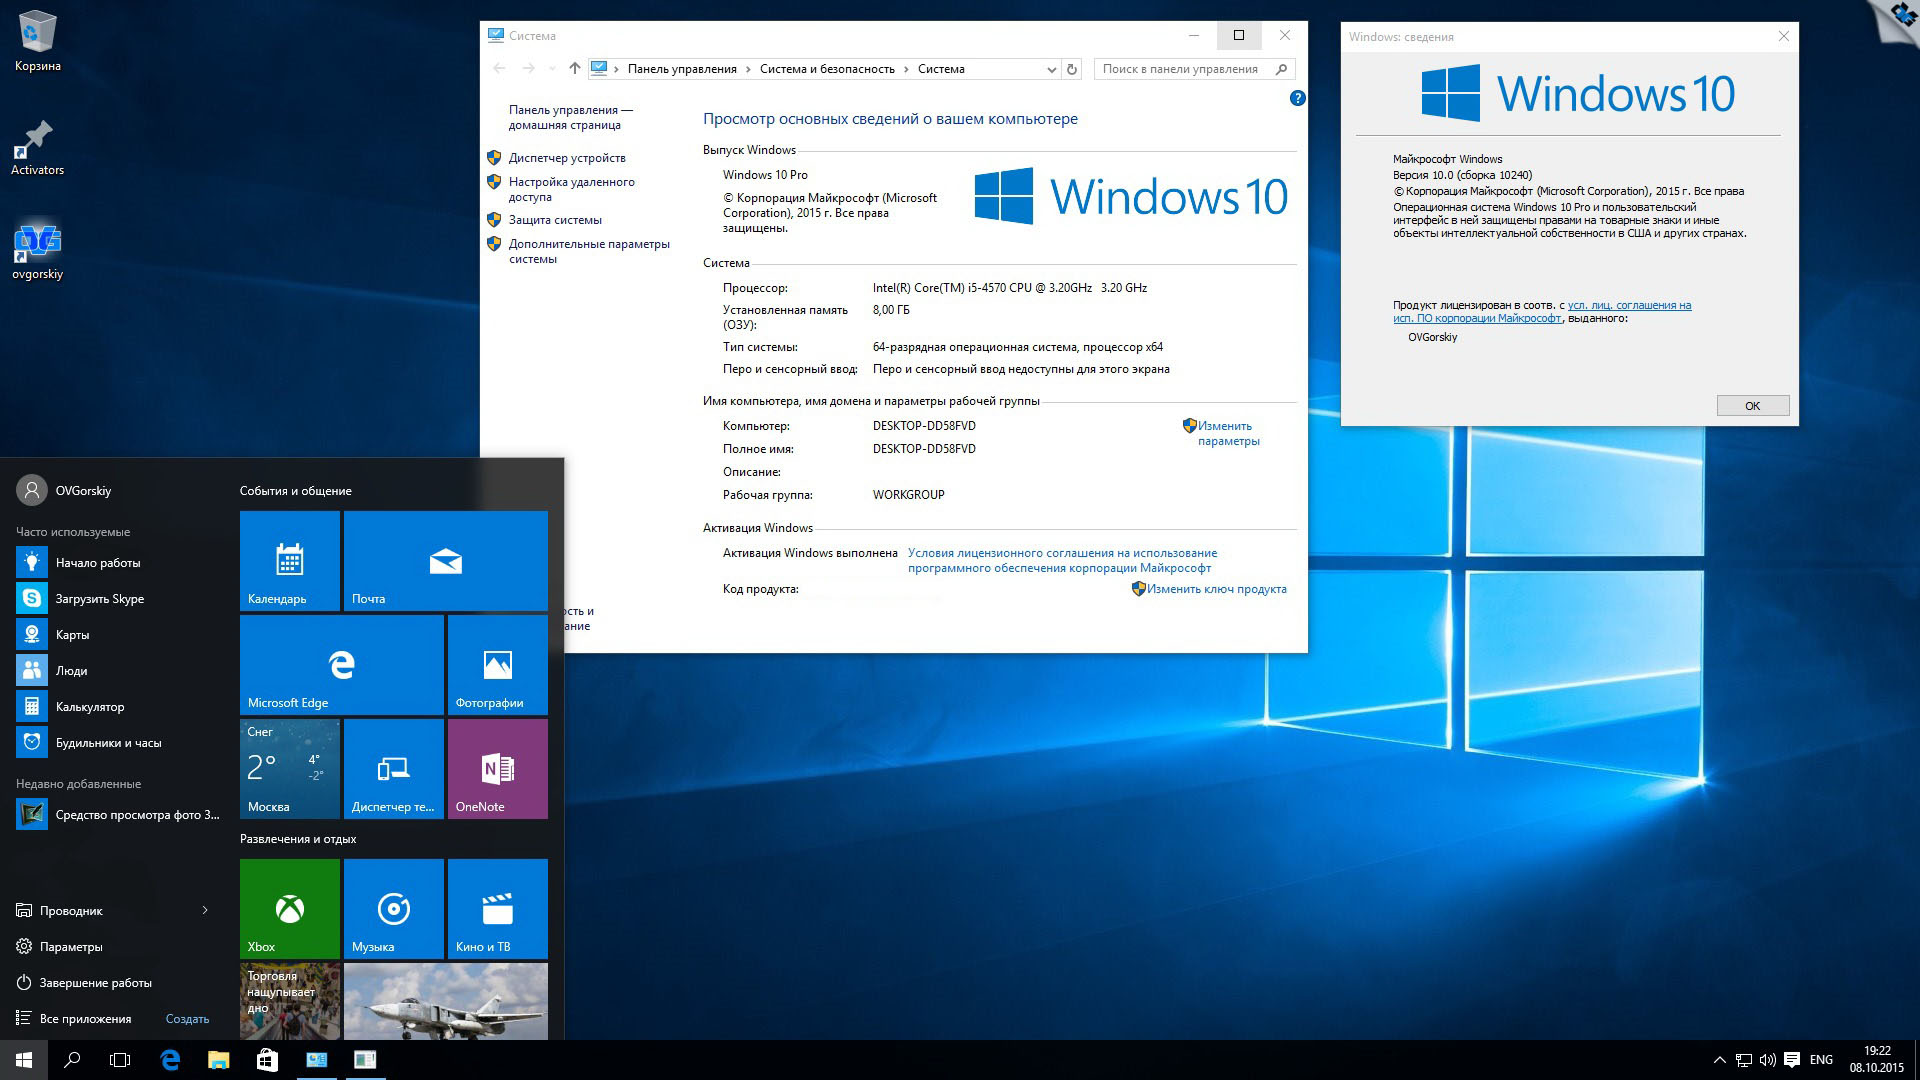 Windows 10 list. Оперативная система виндовс 10. Первая версия виндовс 10. Microsoft Windows 10 Pro. Windows 10 2015 года.